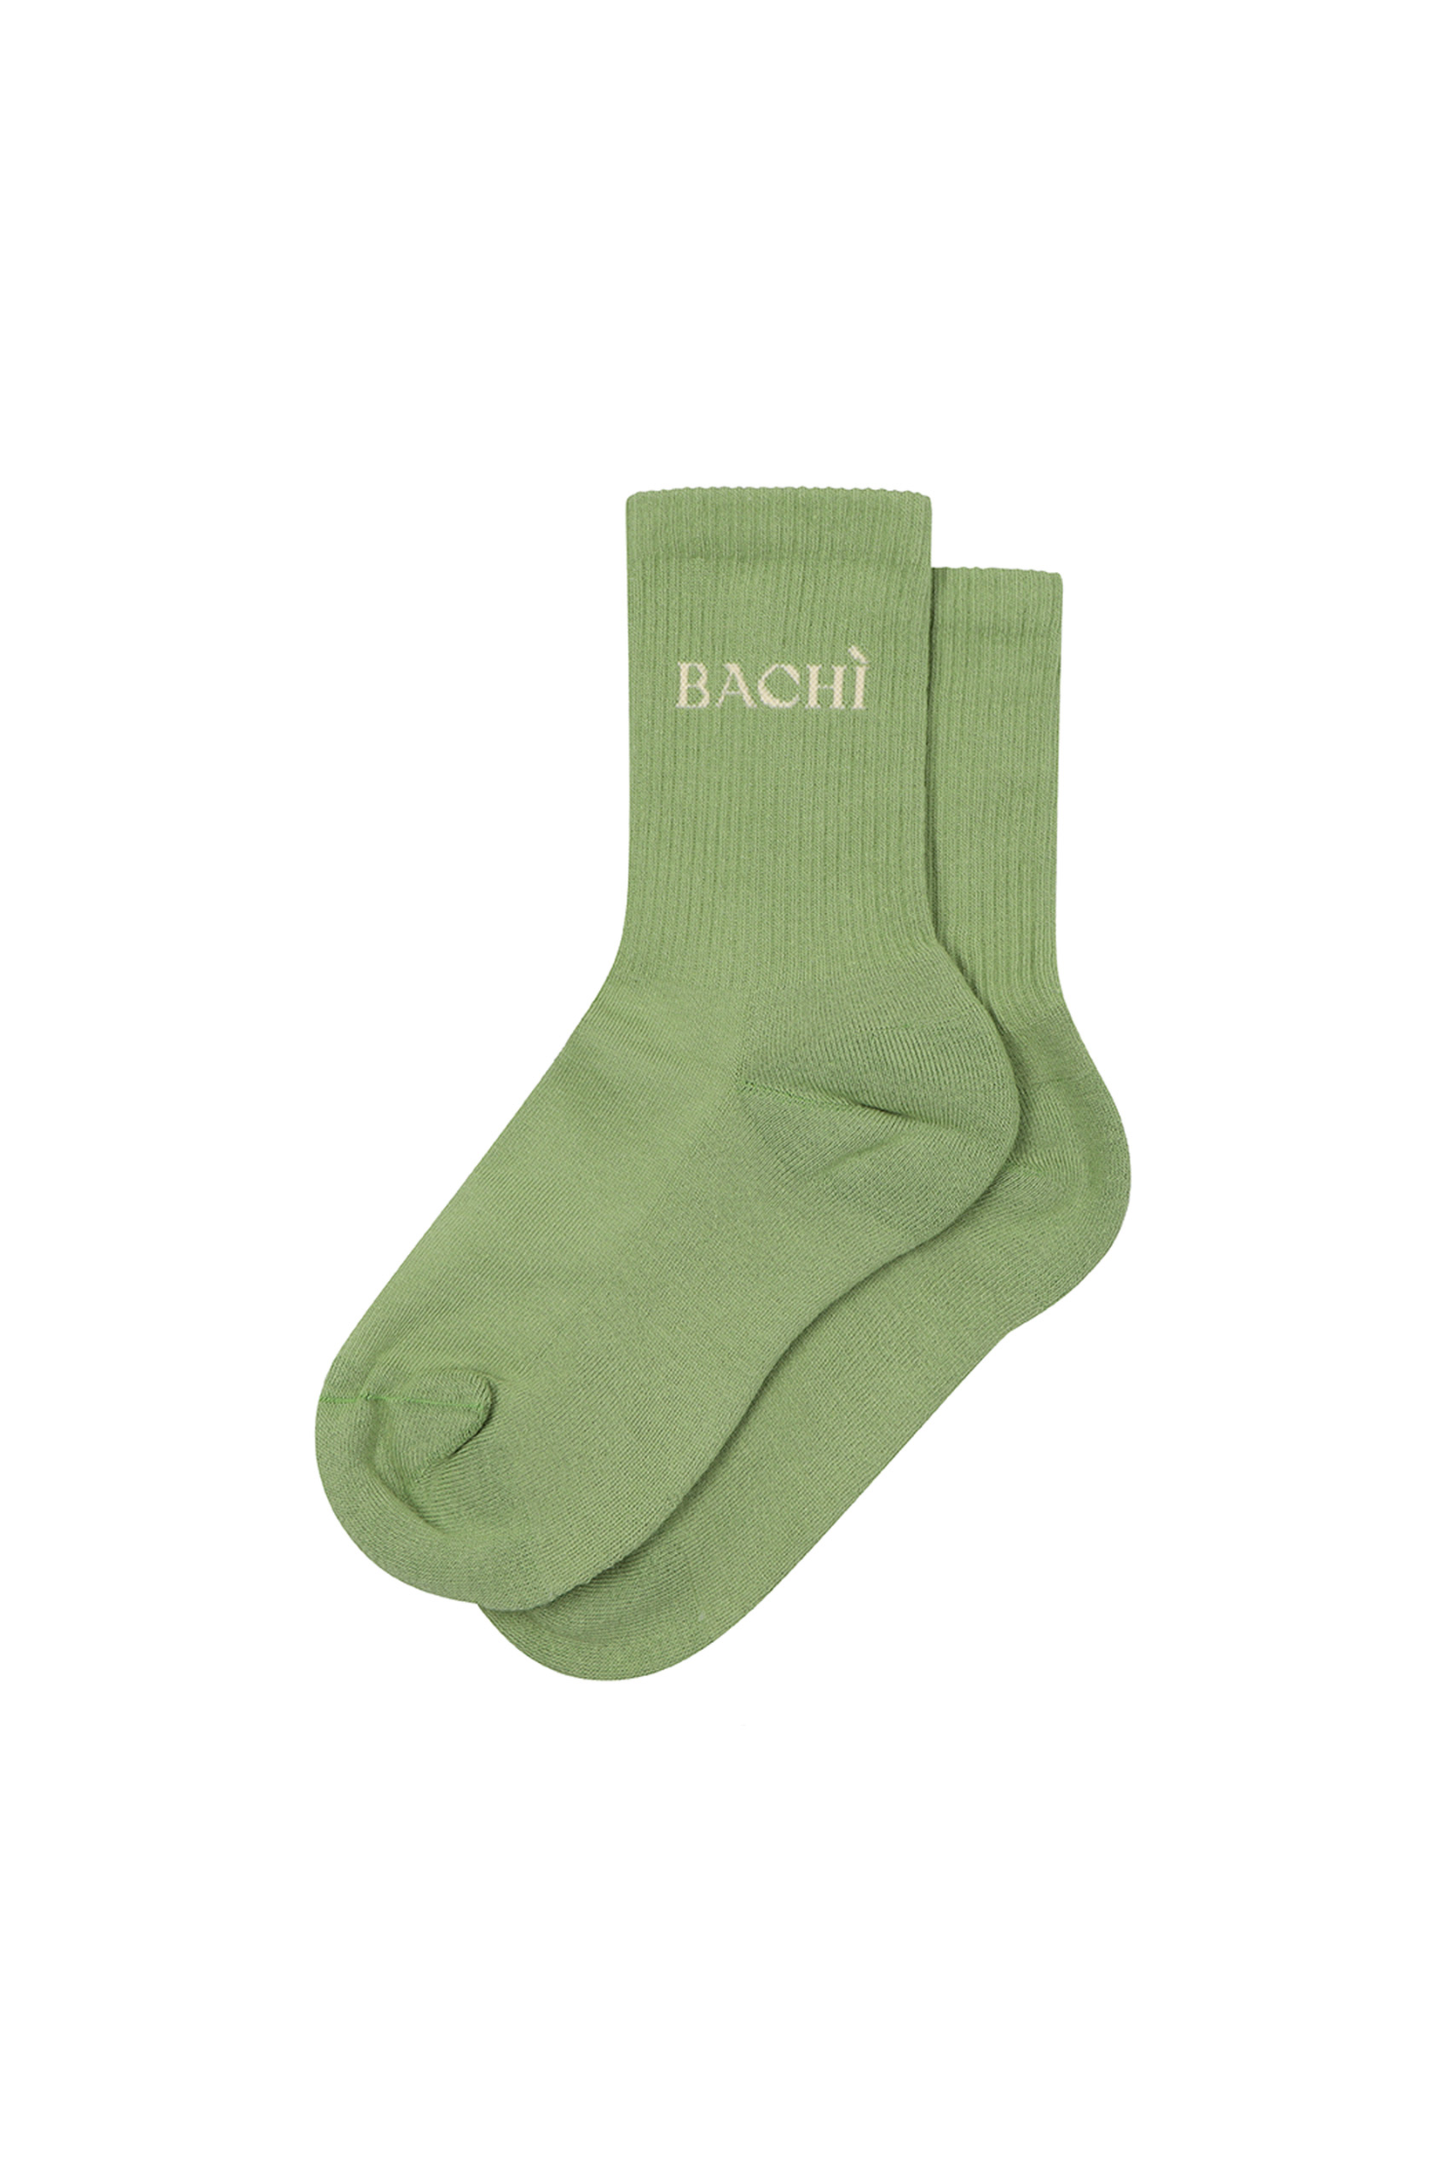 B Socks - Green